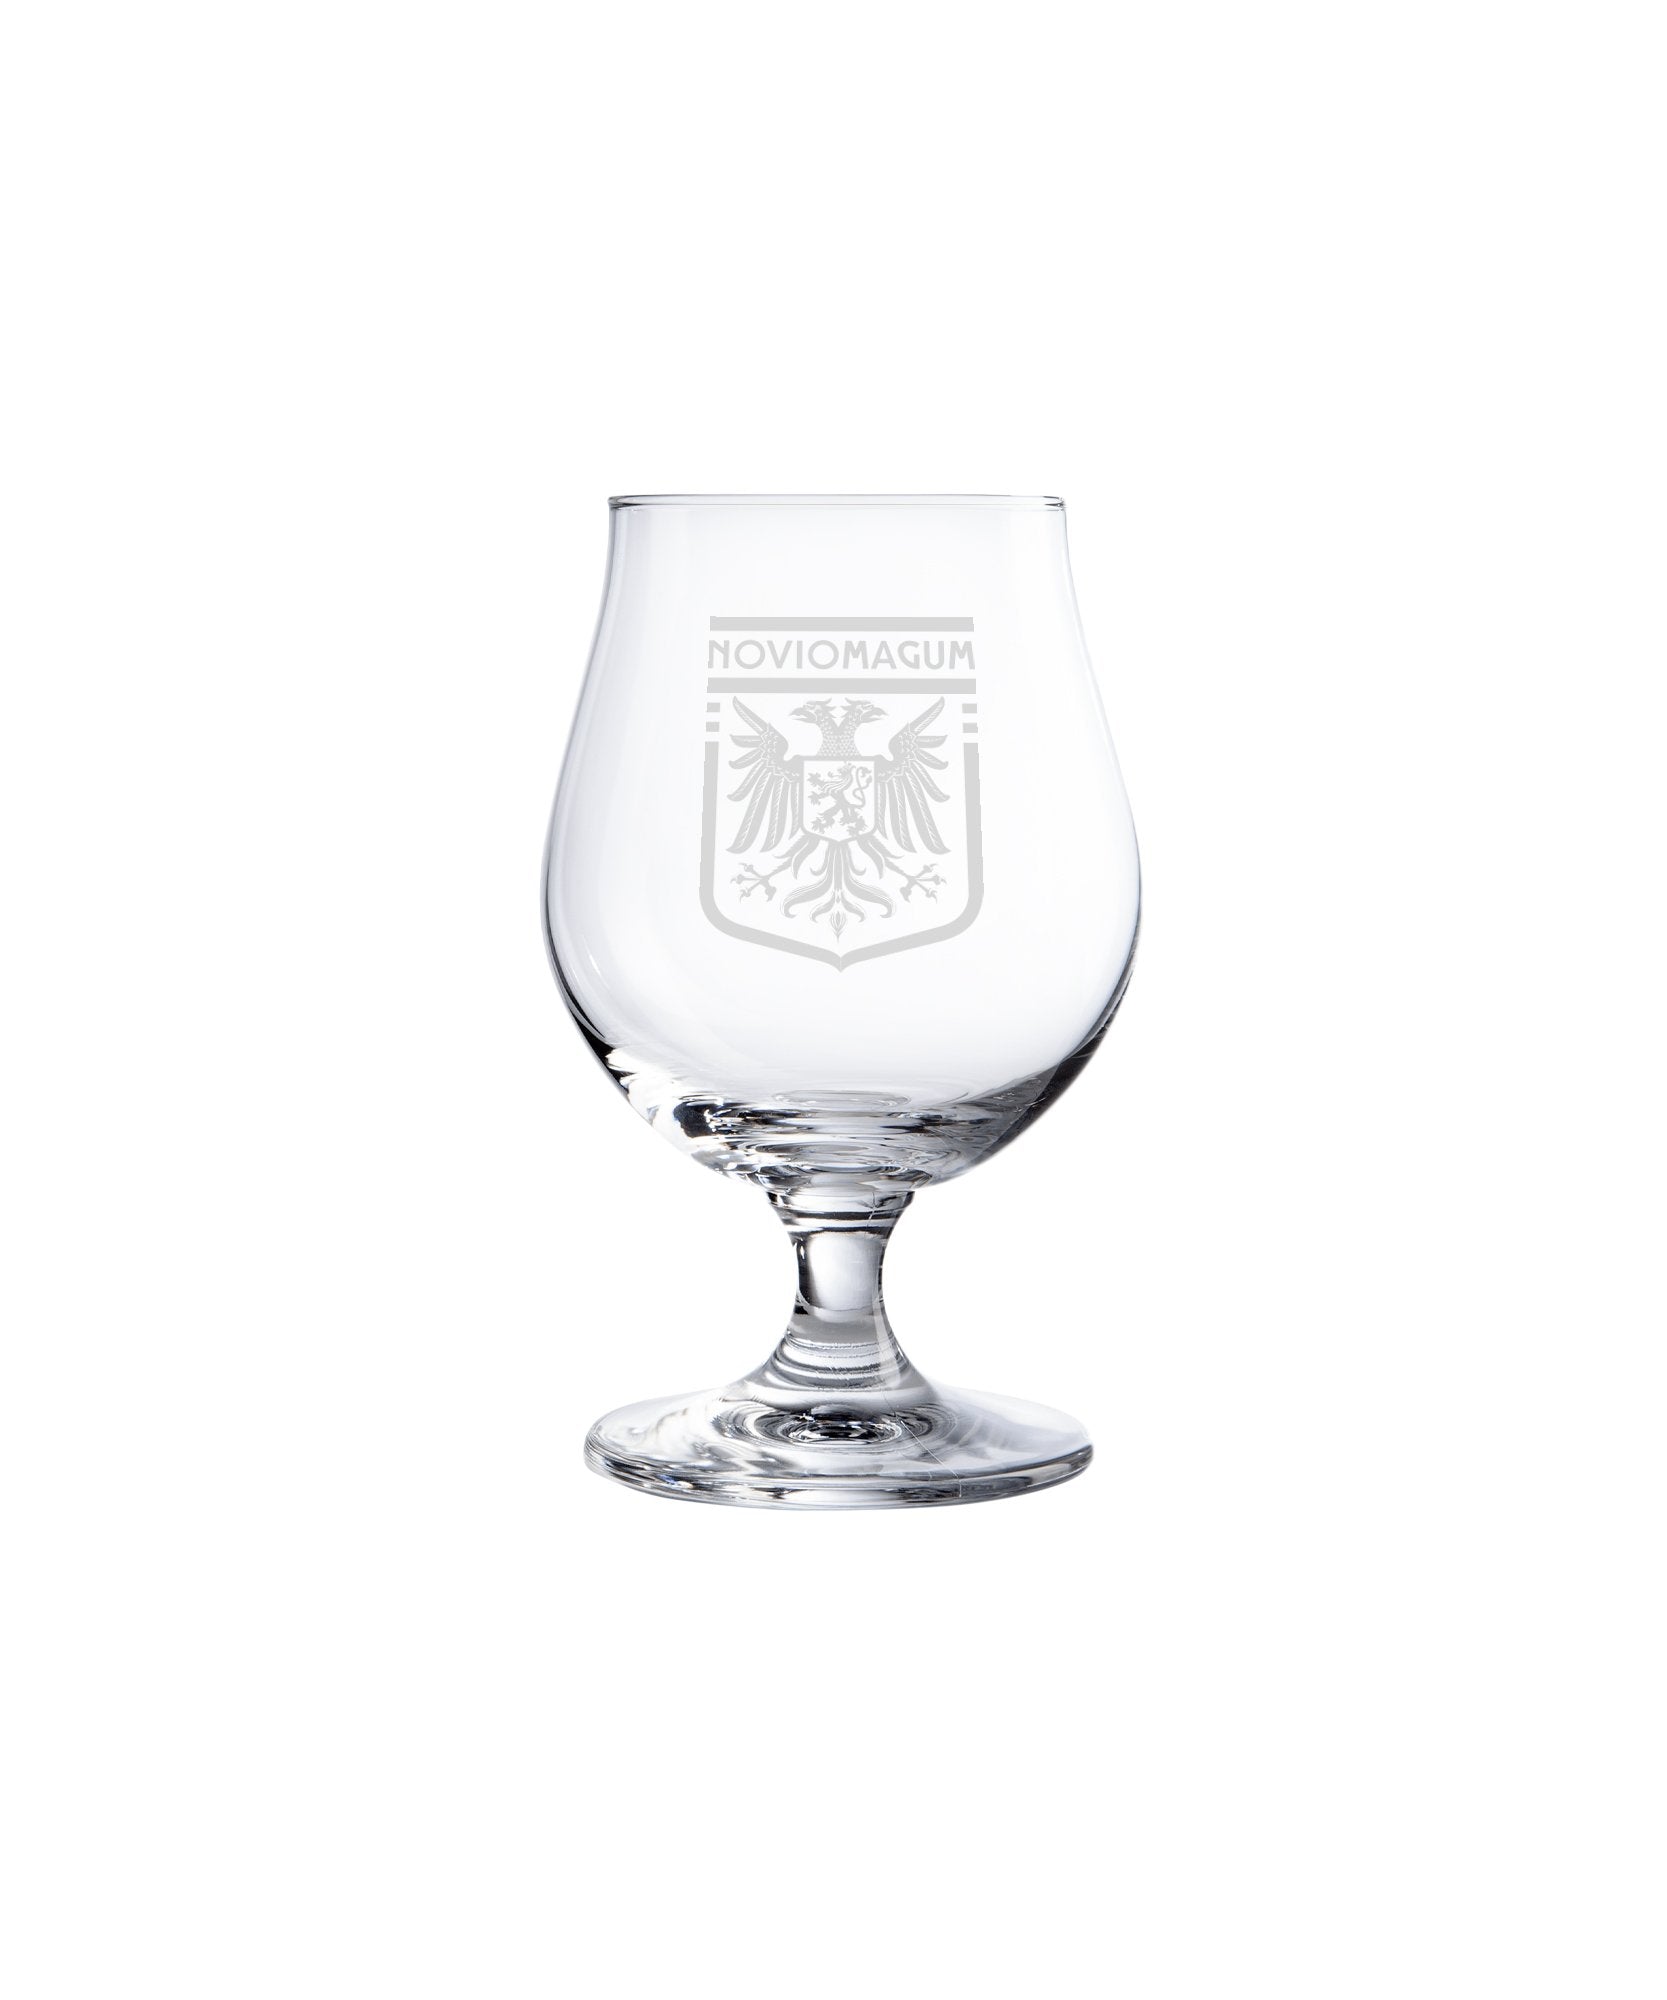 Speciaalbier-glas met Noviomagum logo